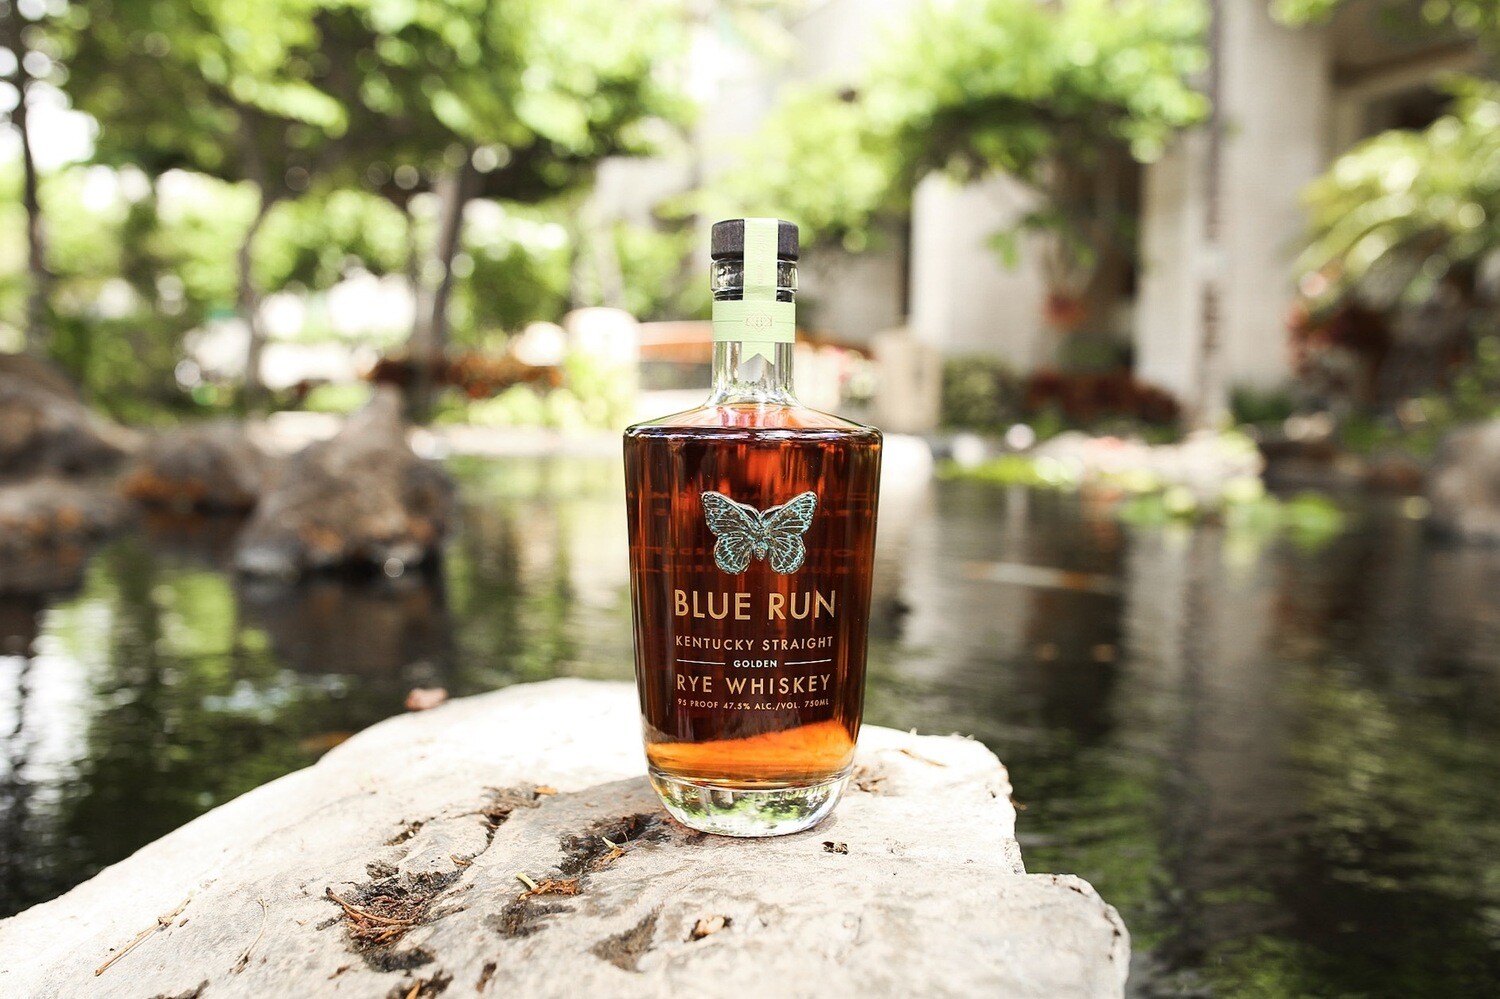 Blue Run 4 Year High Rye Bourbon